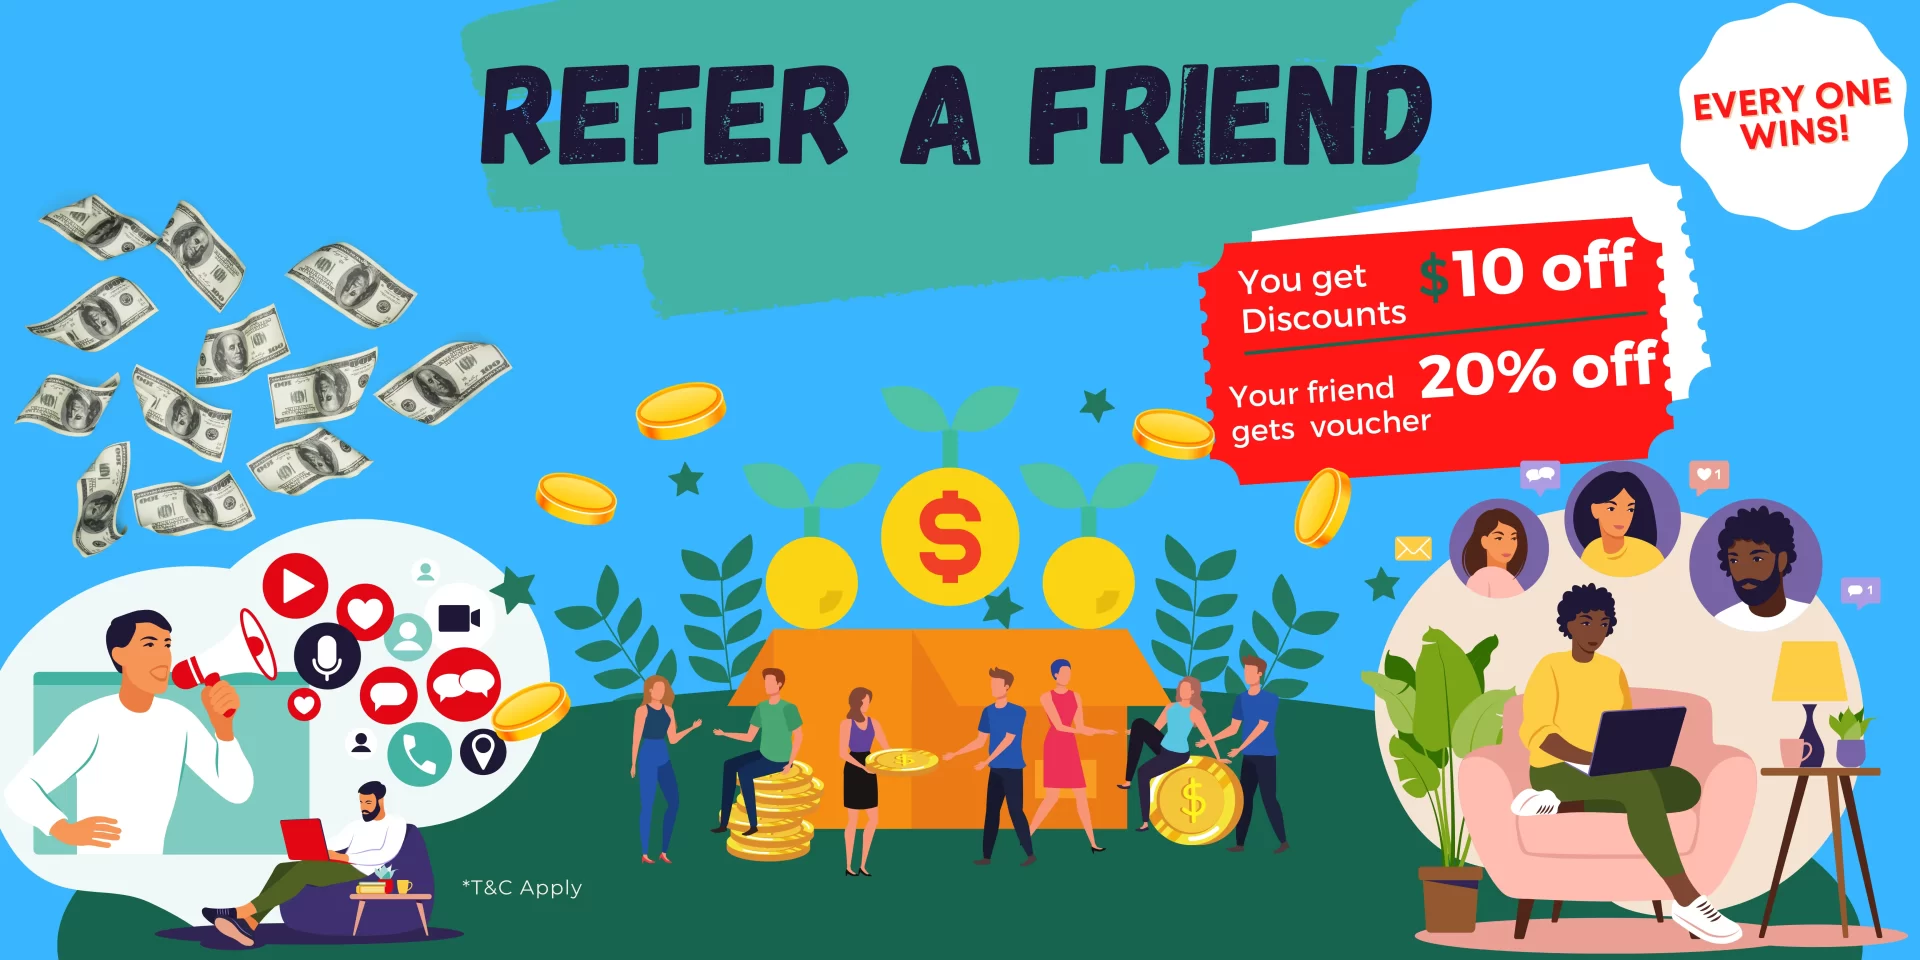 Refer a friend Banner by Cloud Legends 420